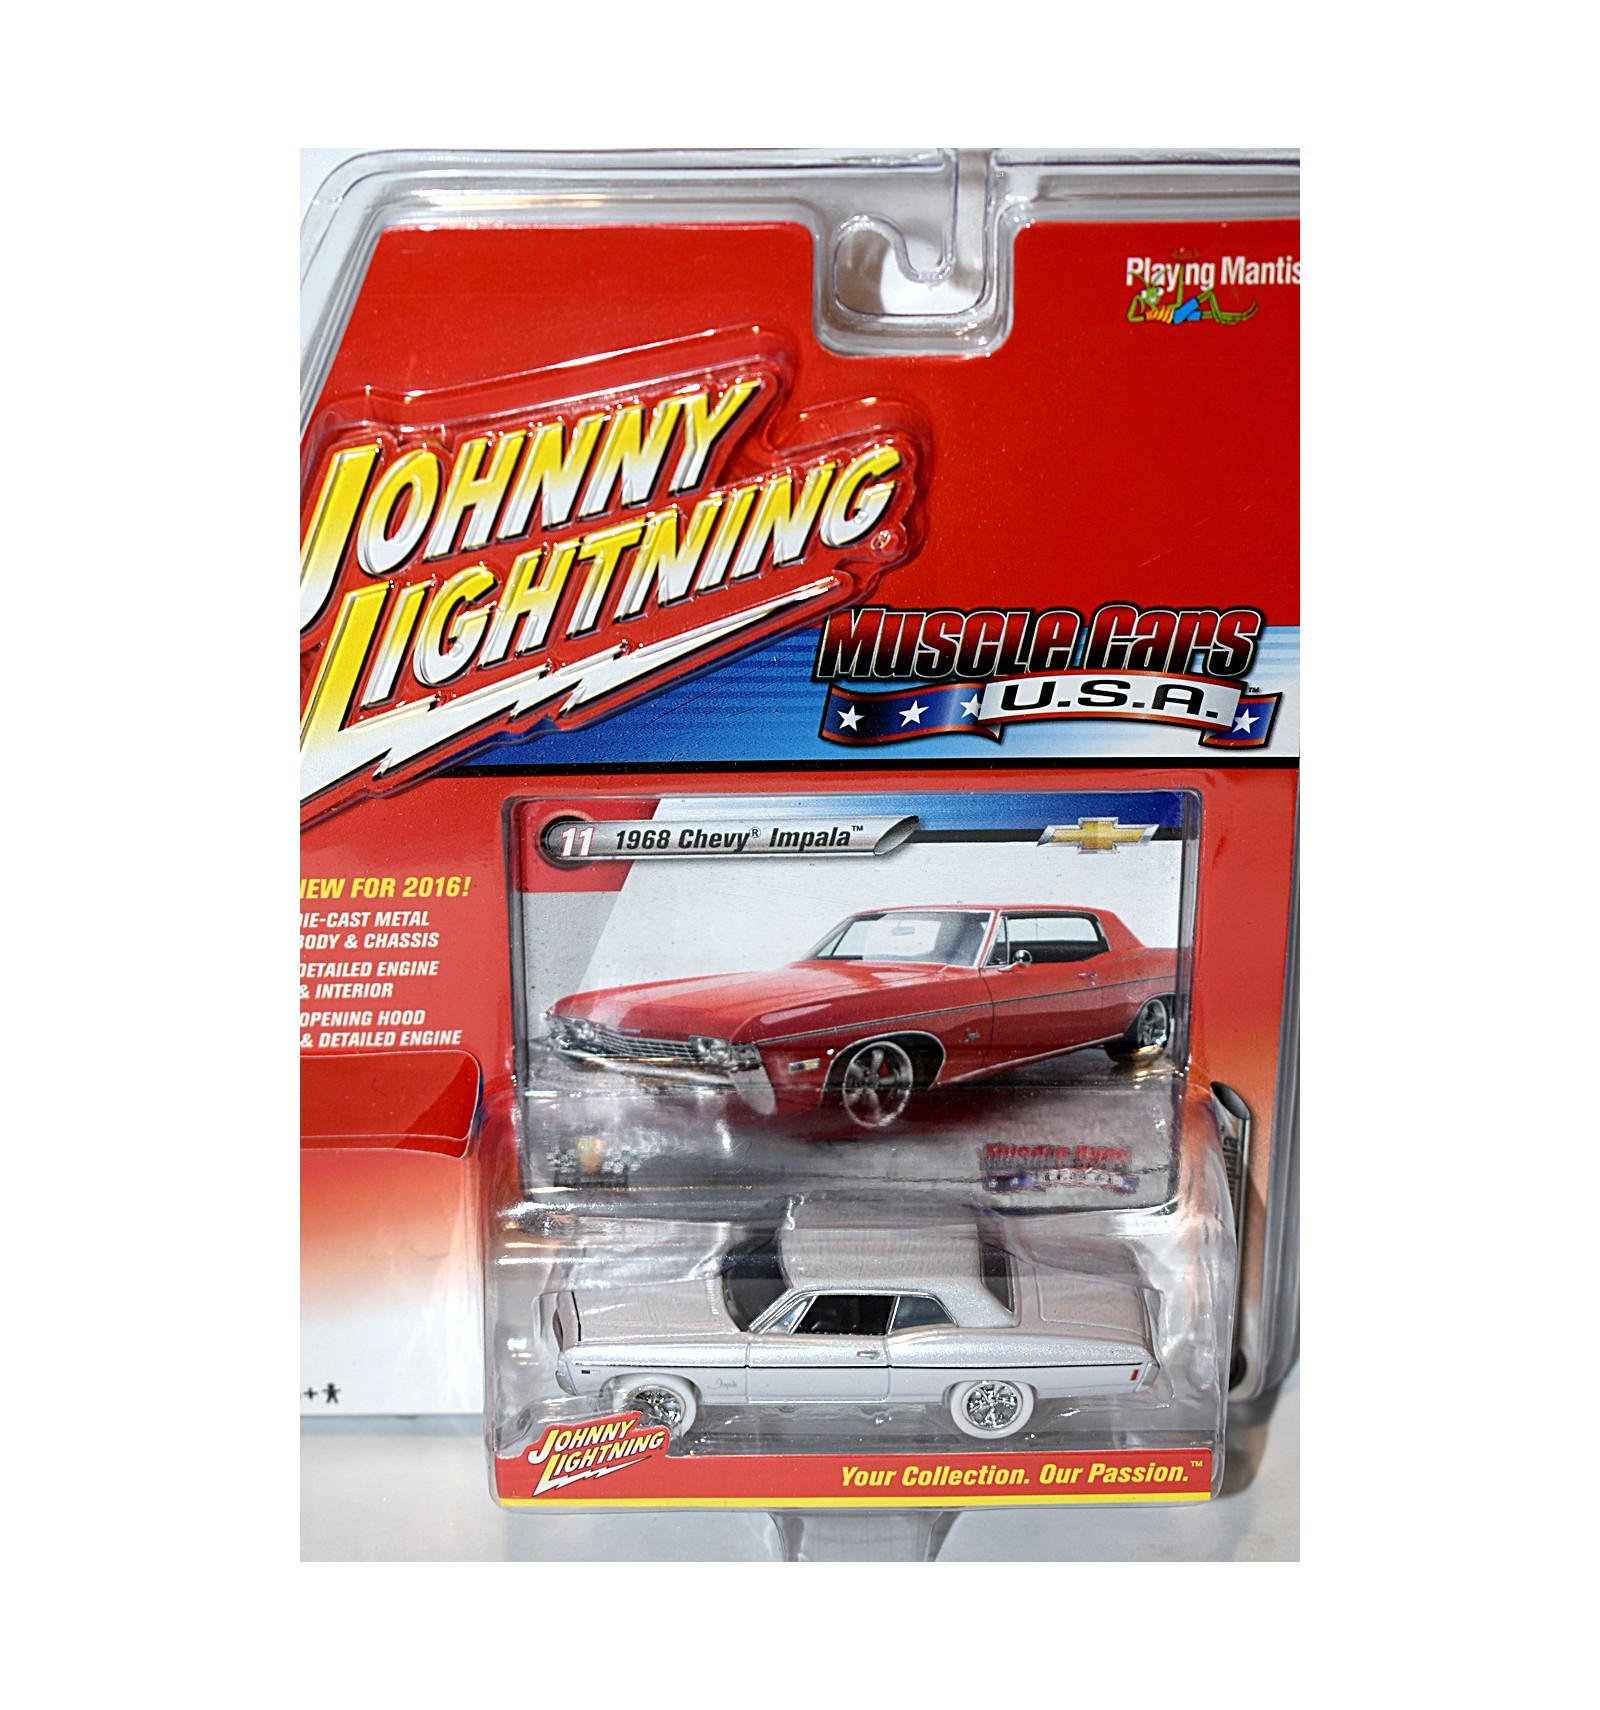 Johnny Lightning Muscle Cars USA - Rare White Lightning - 1968